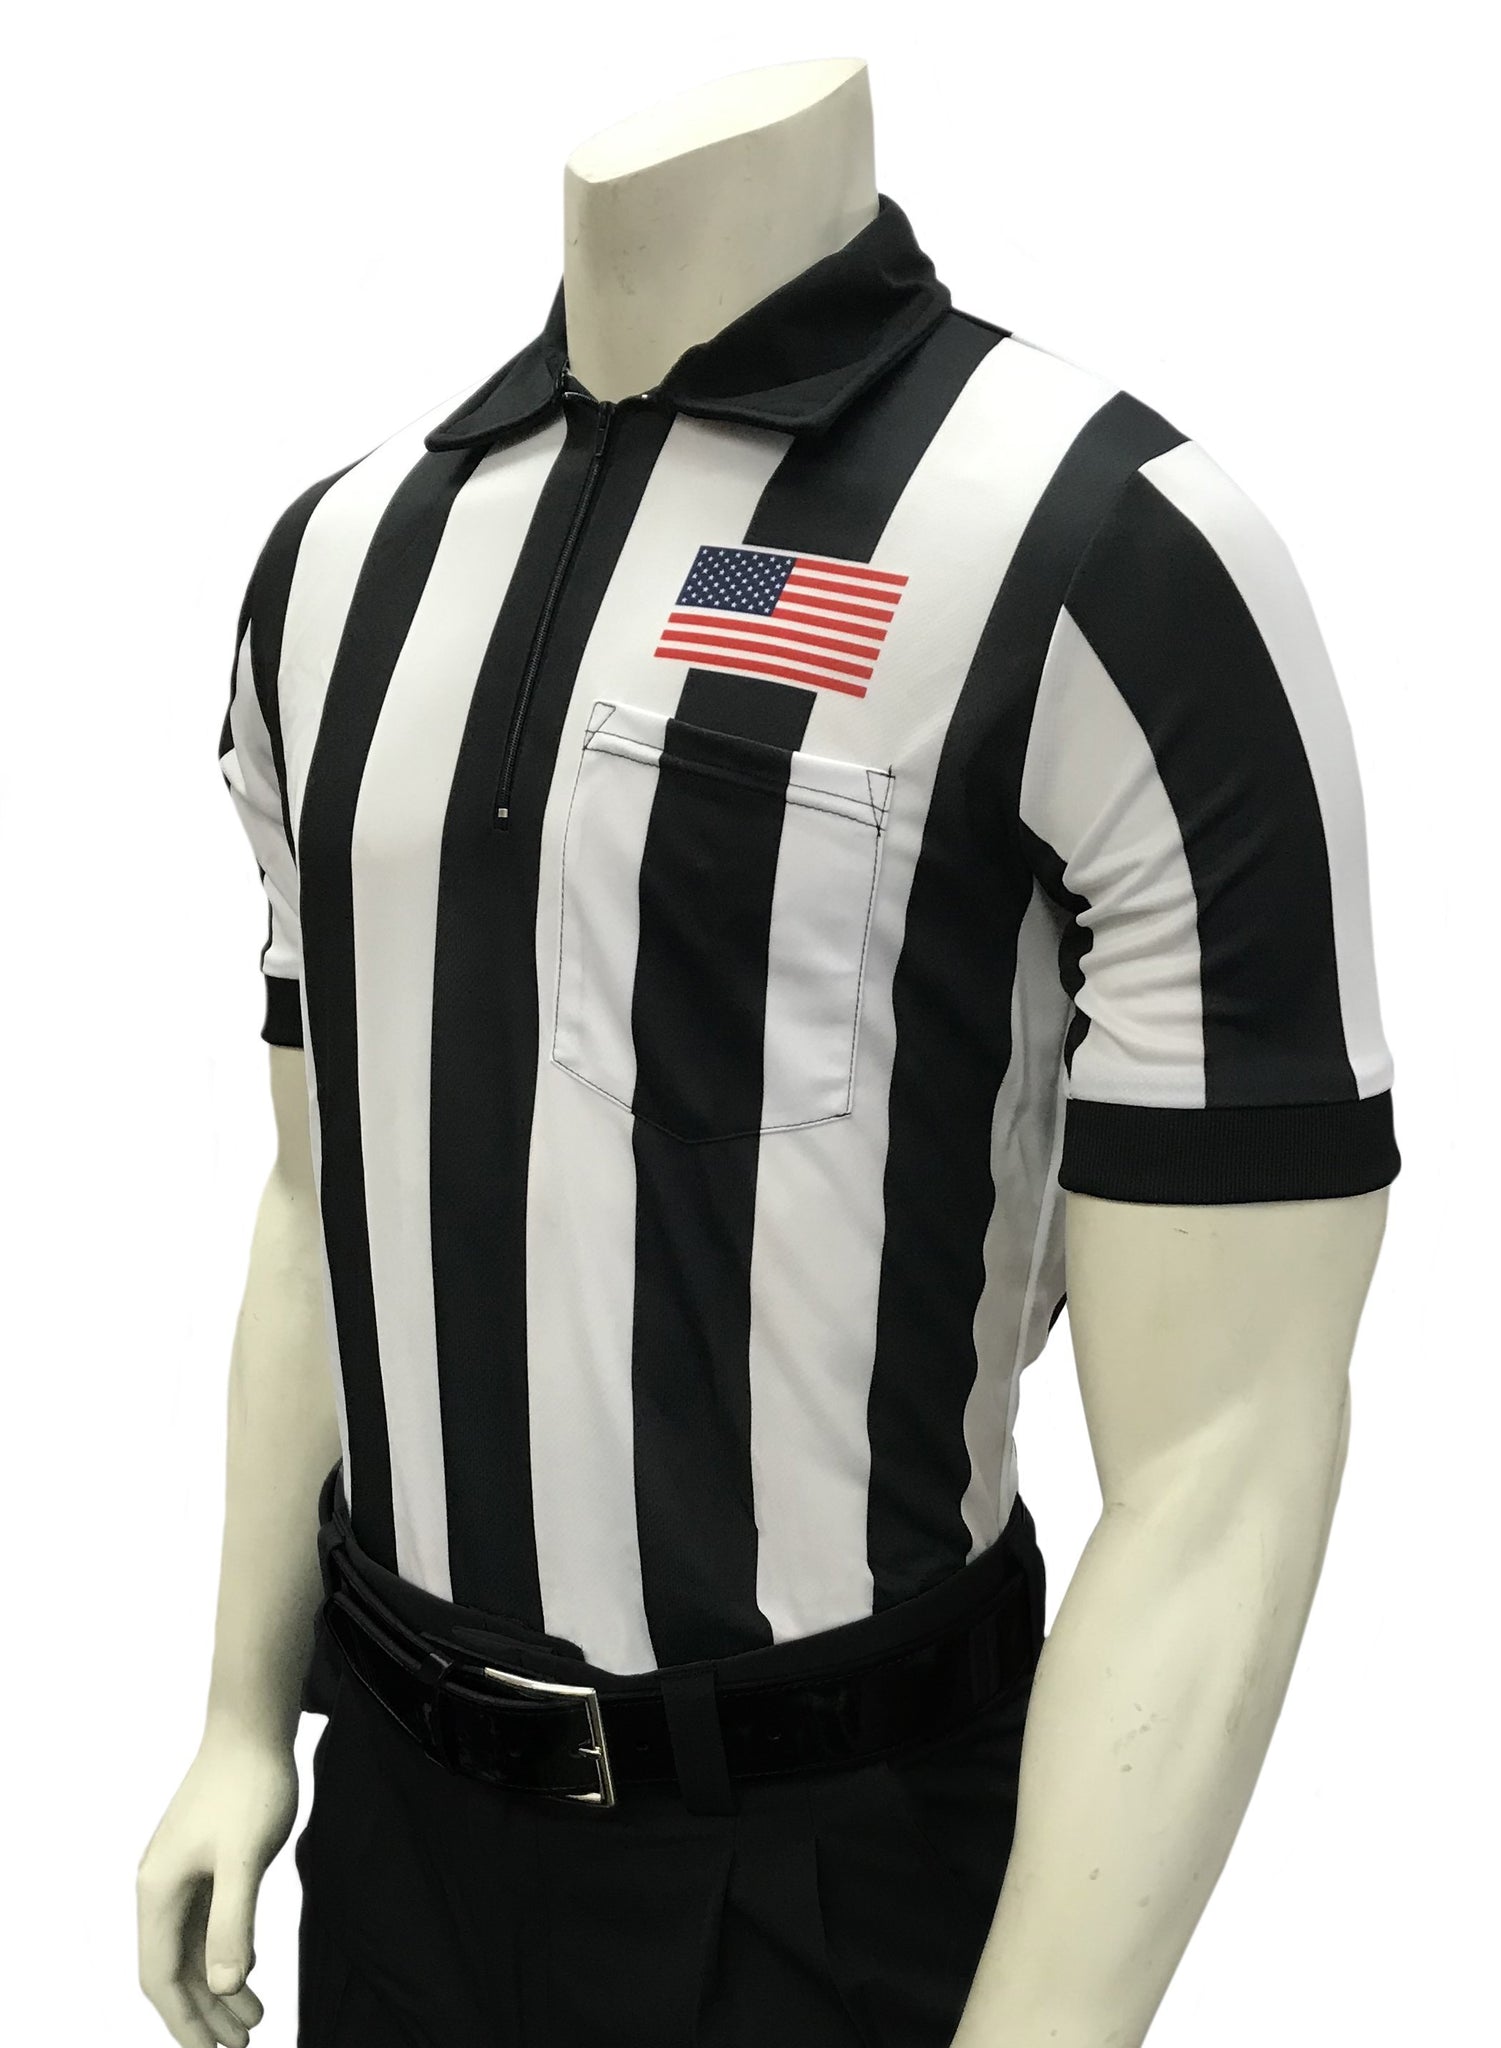 USA117 - Smitty "Made in USA" - Dye Sub Football Short Sleeve Shirt w/ Flag Above Pocket